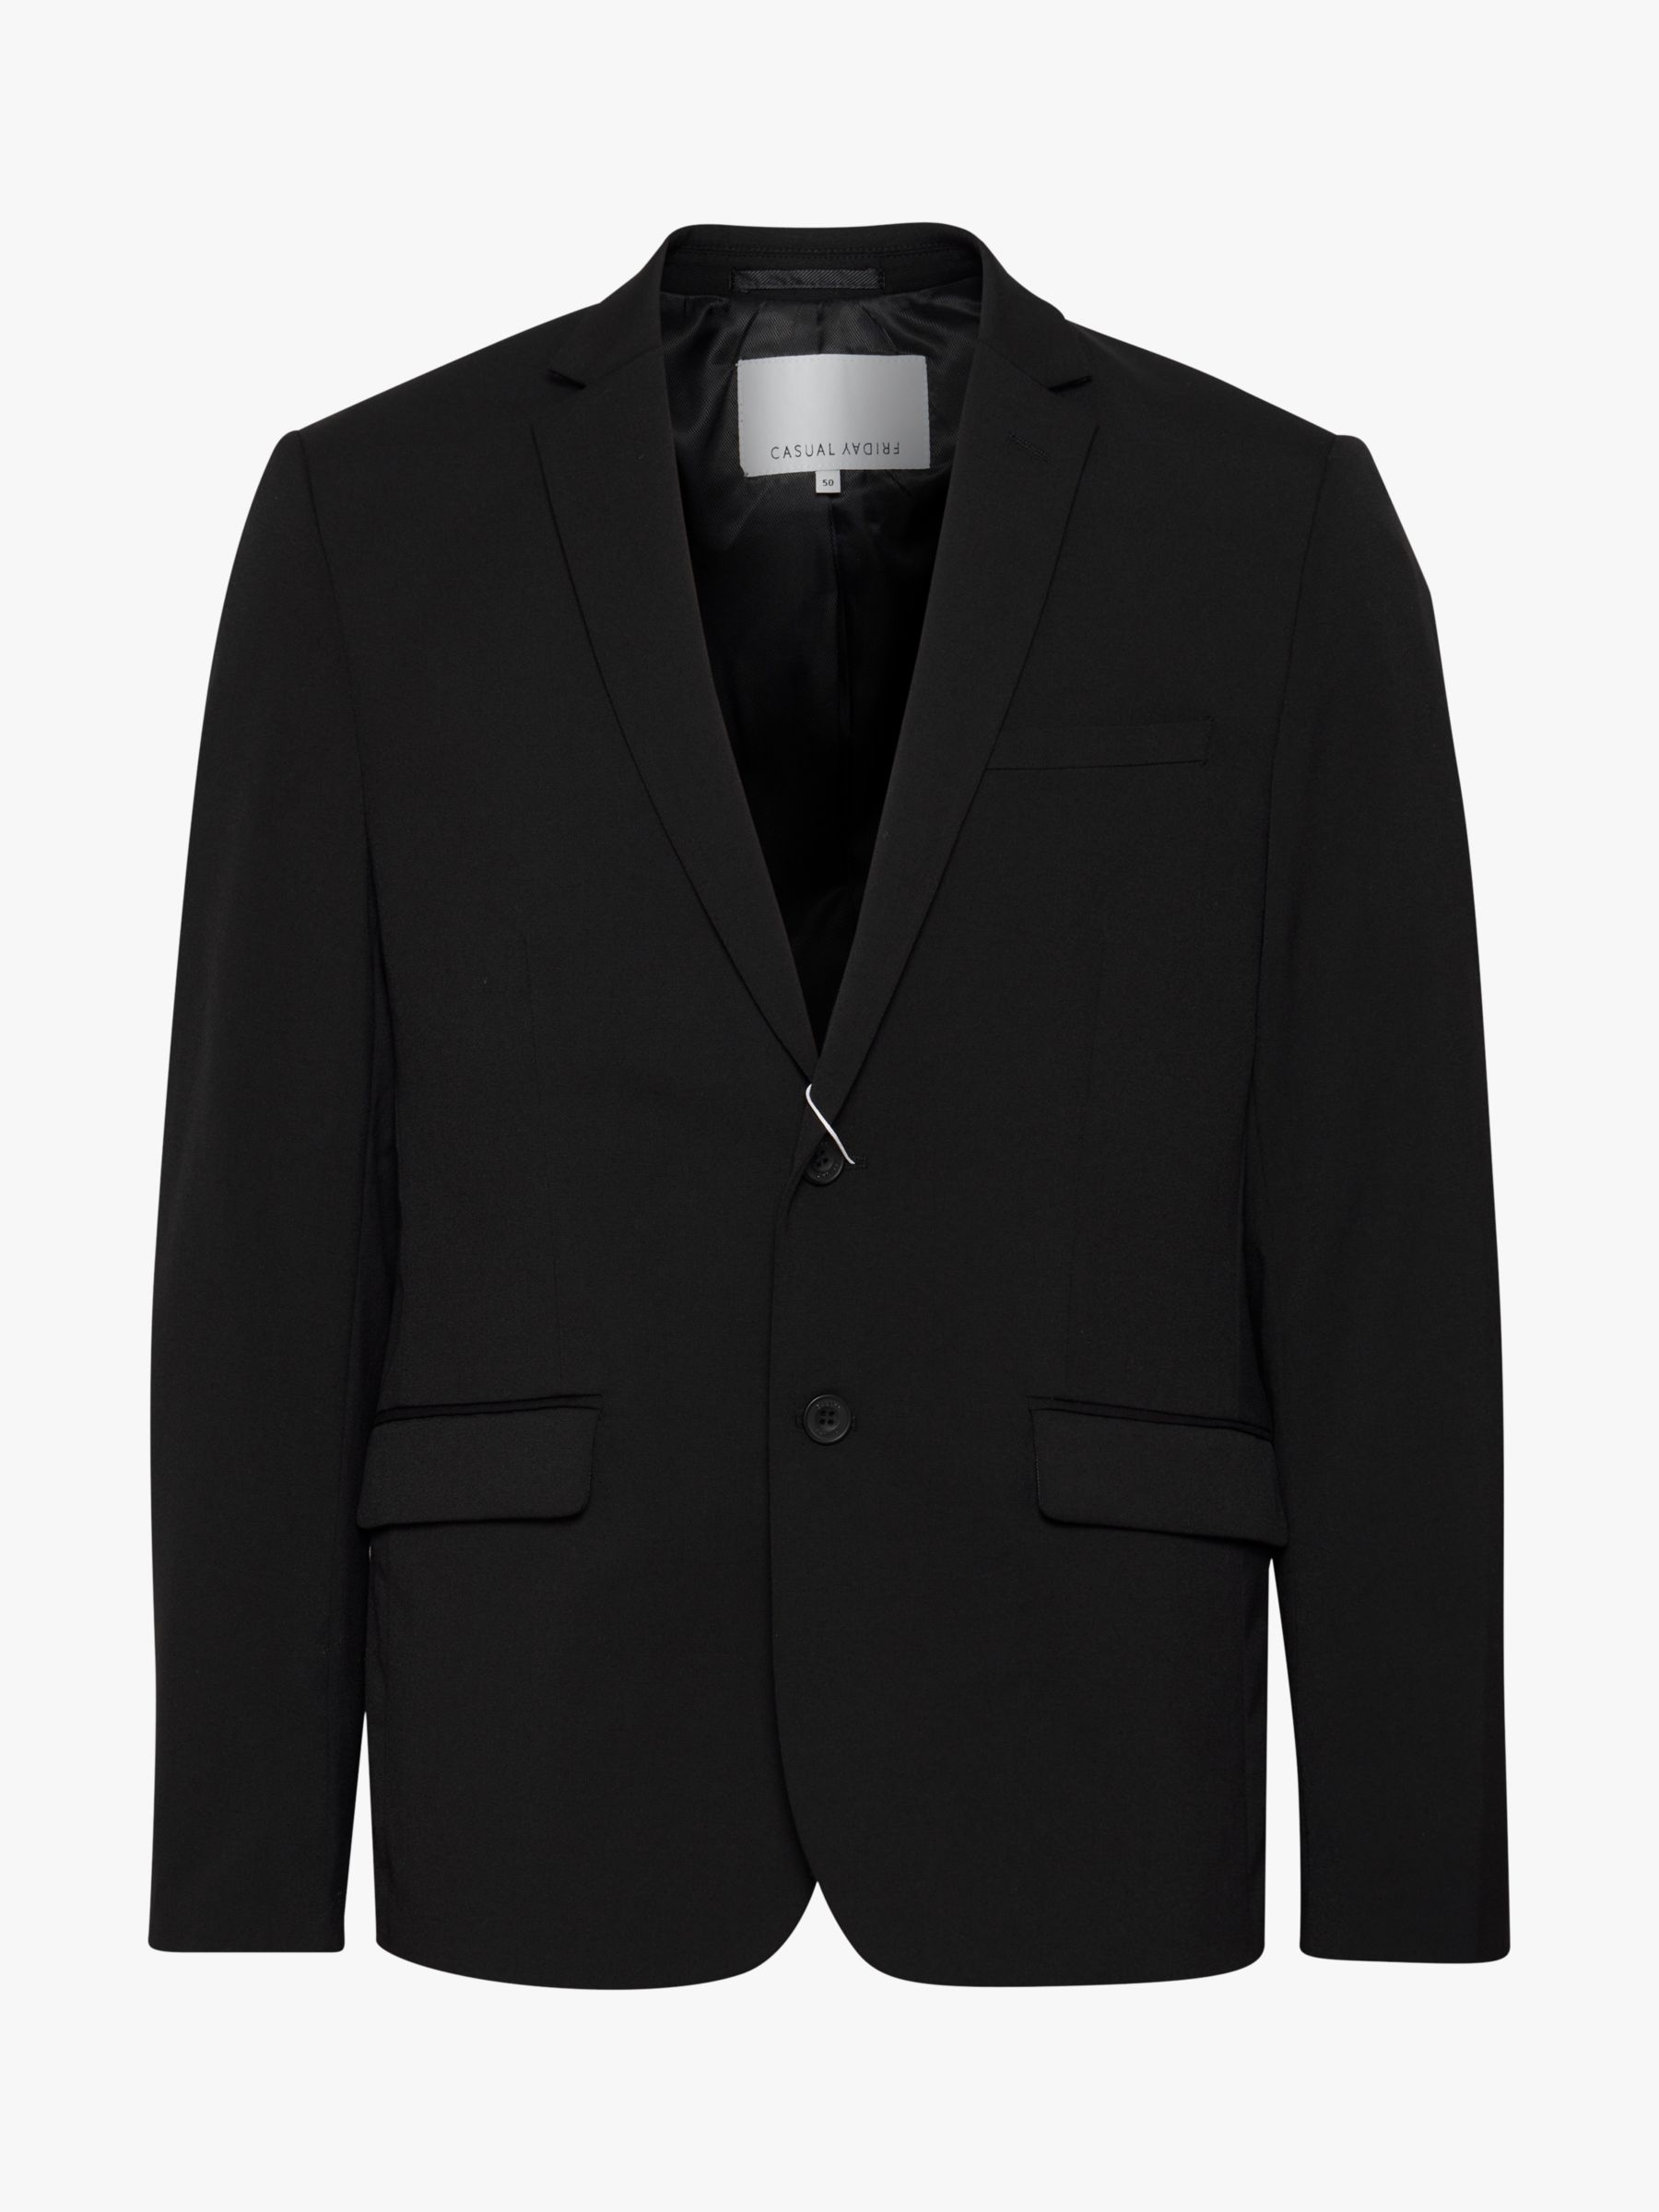 Casual Friday Bernd Slim Fit Suit Jacket, Black, 46